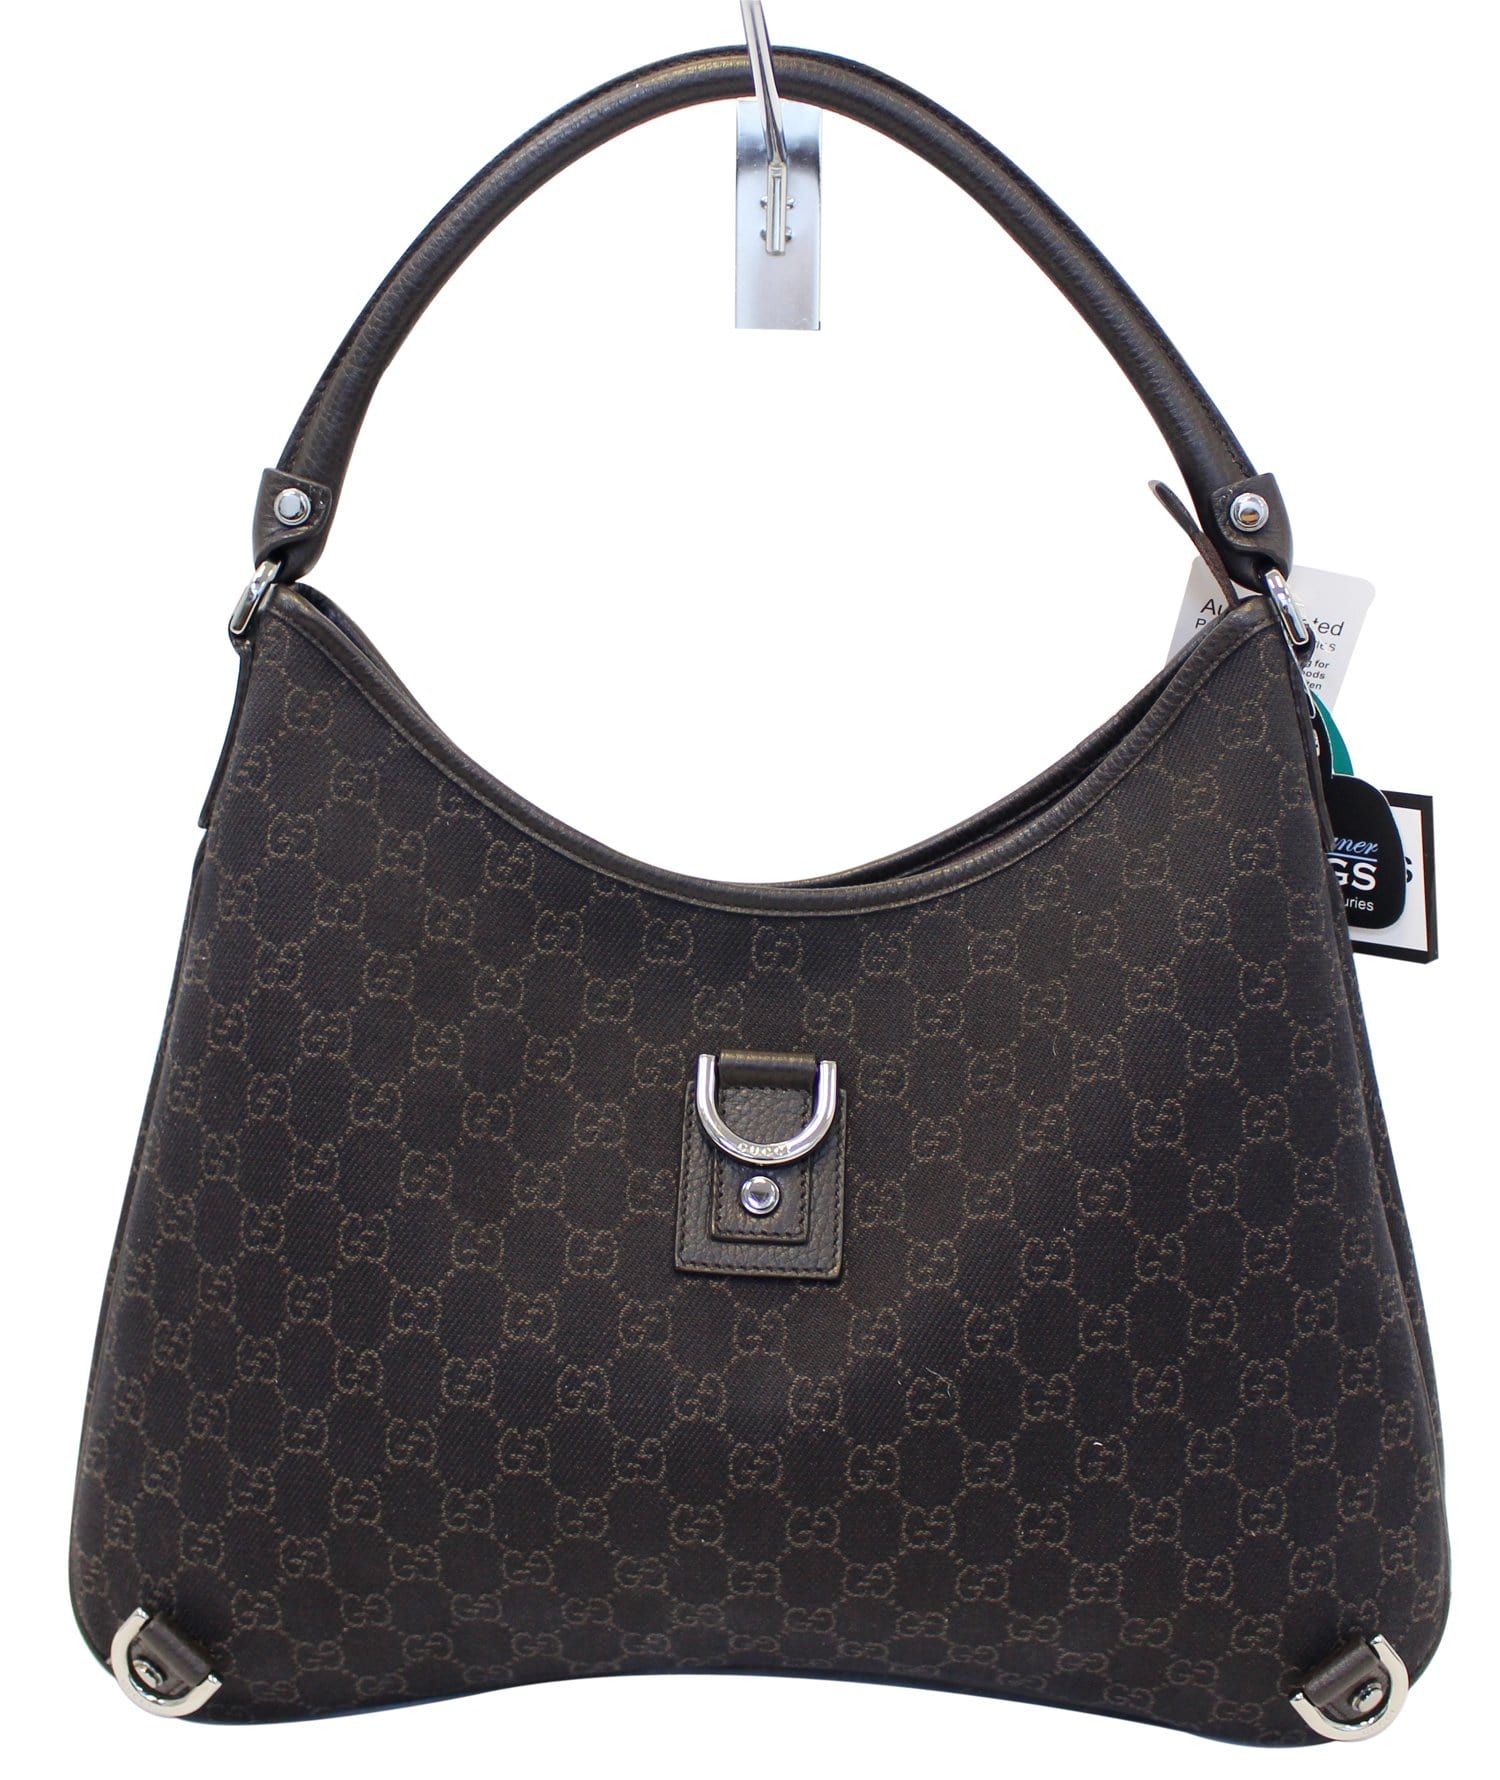 Gucci Black Leather Large D-Ring Hobo Bag